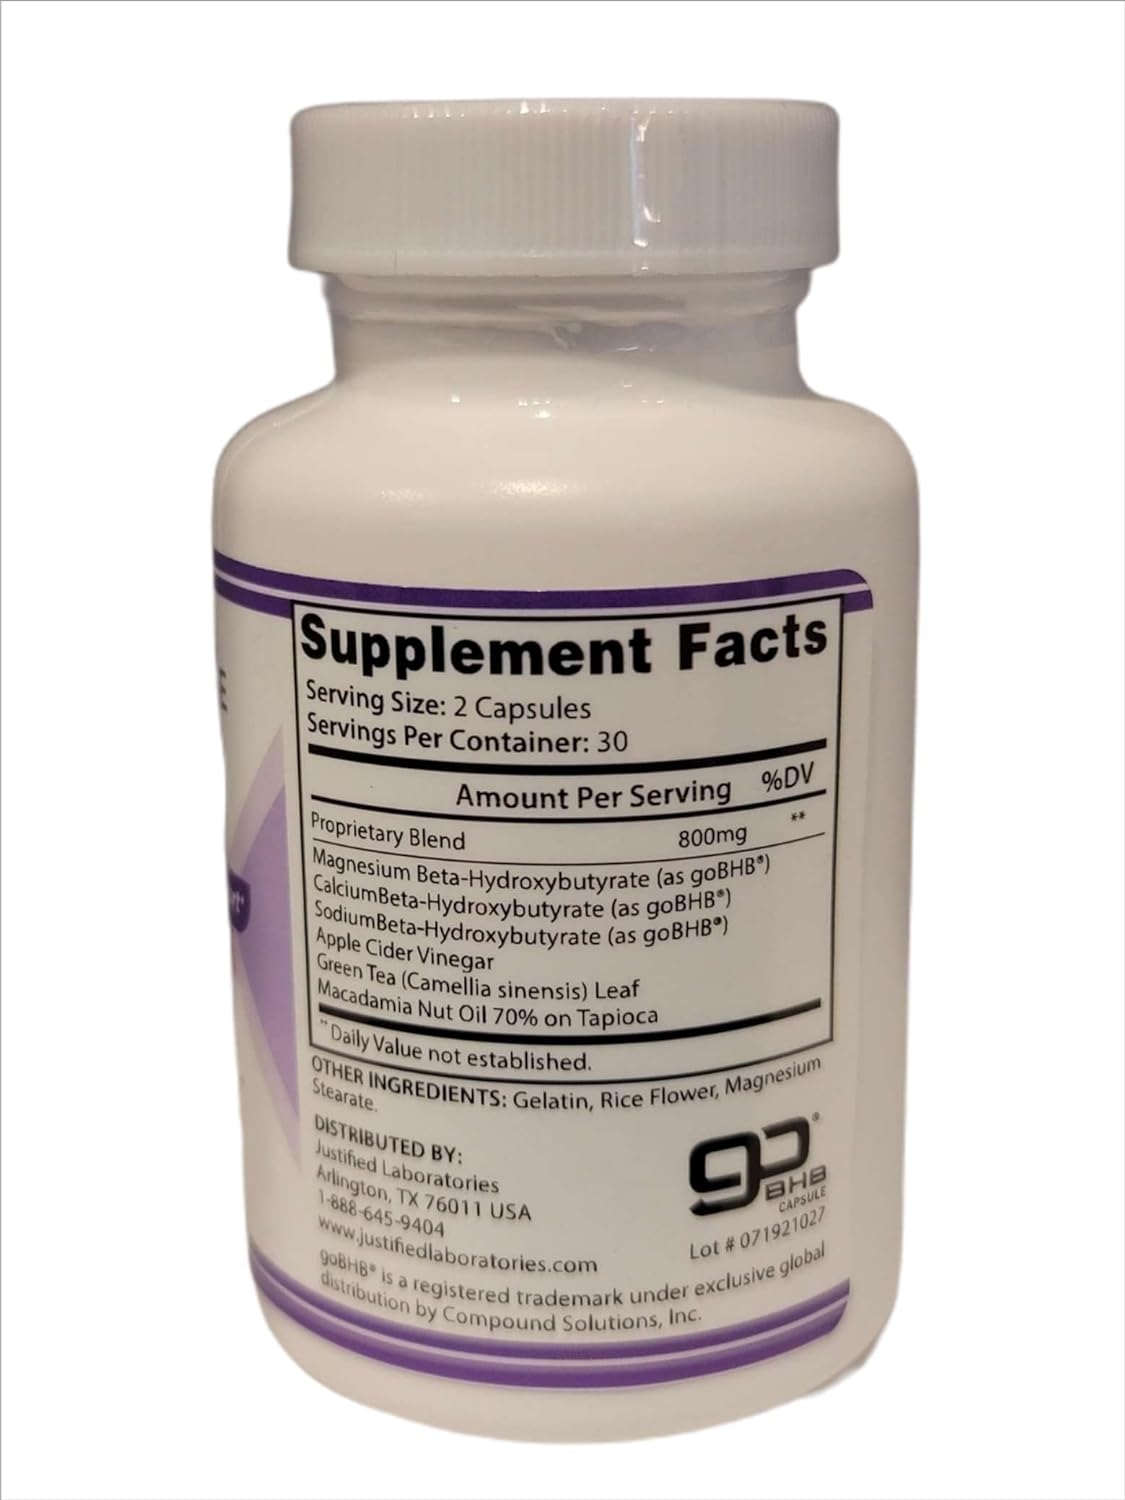 Supreme Keto Pills Includes Apple Cider Vinegar goBHB Exogenous Ketones Advanced Ketogenic Supplement Ketosis Support for Men Women 60 Capsules